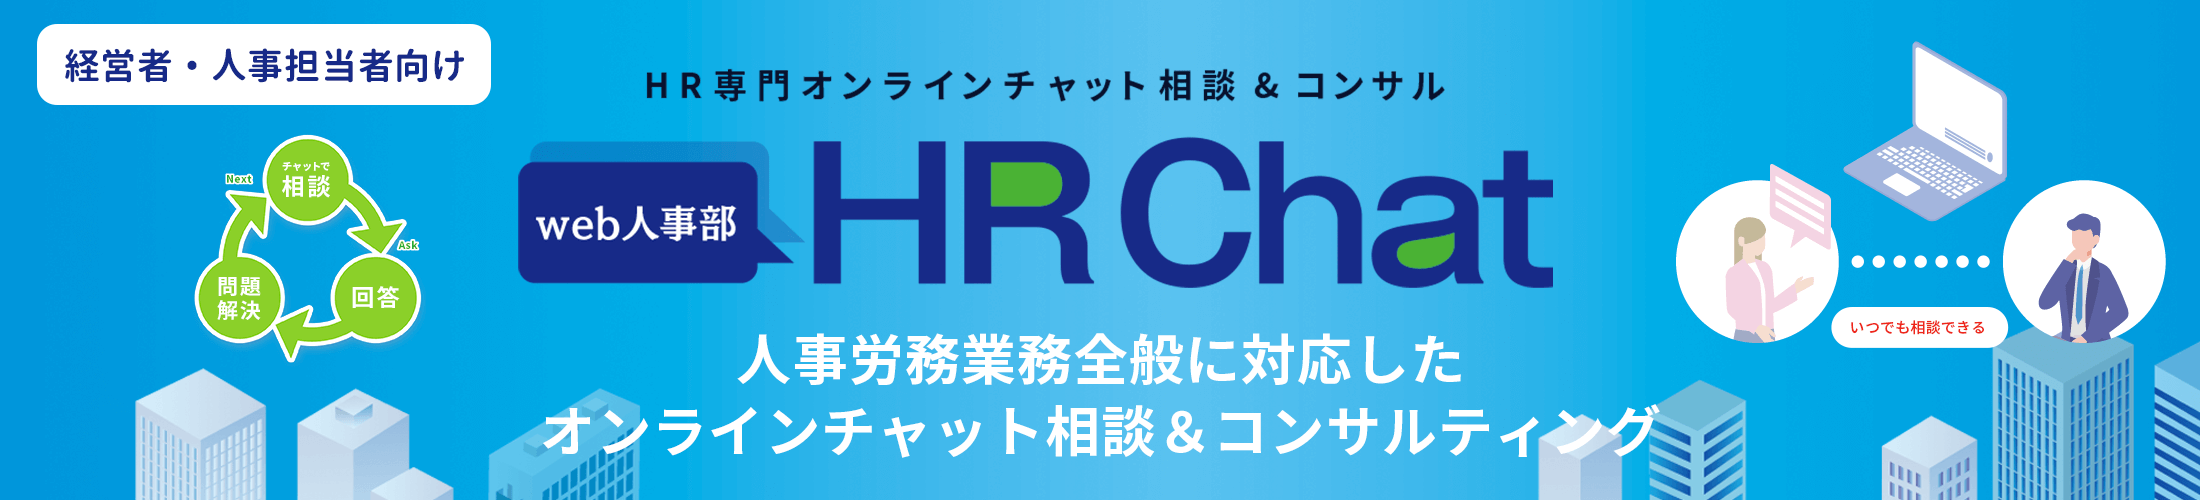 web人事部 HR Chat